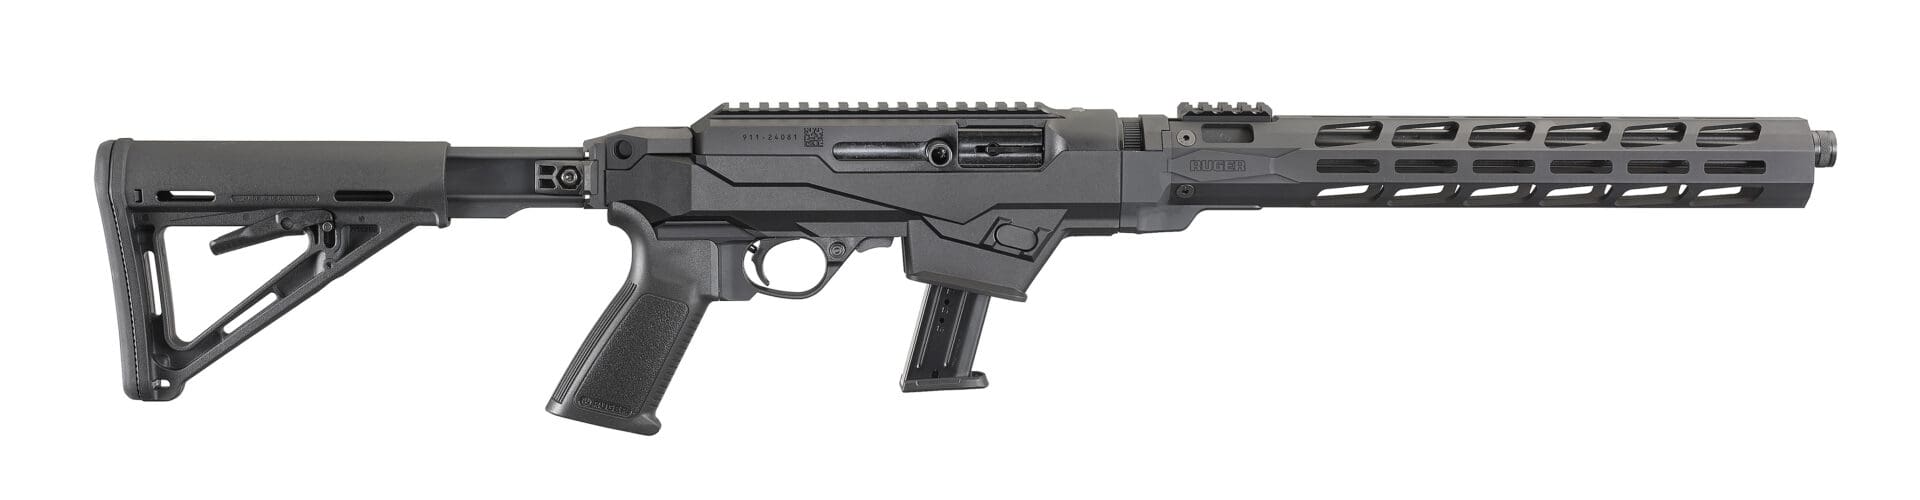 Ruger pistol caliber PC carbine chassis model